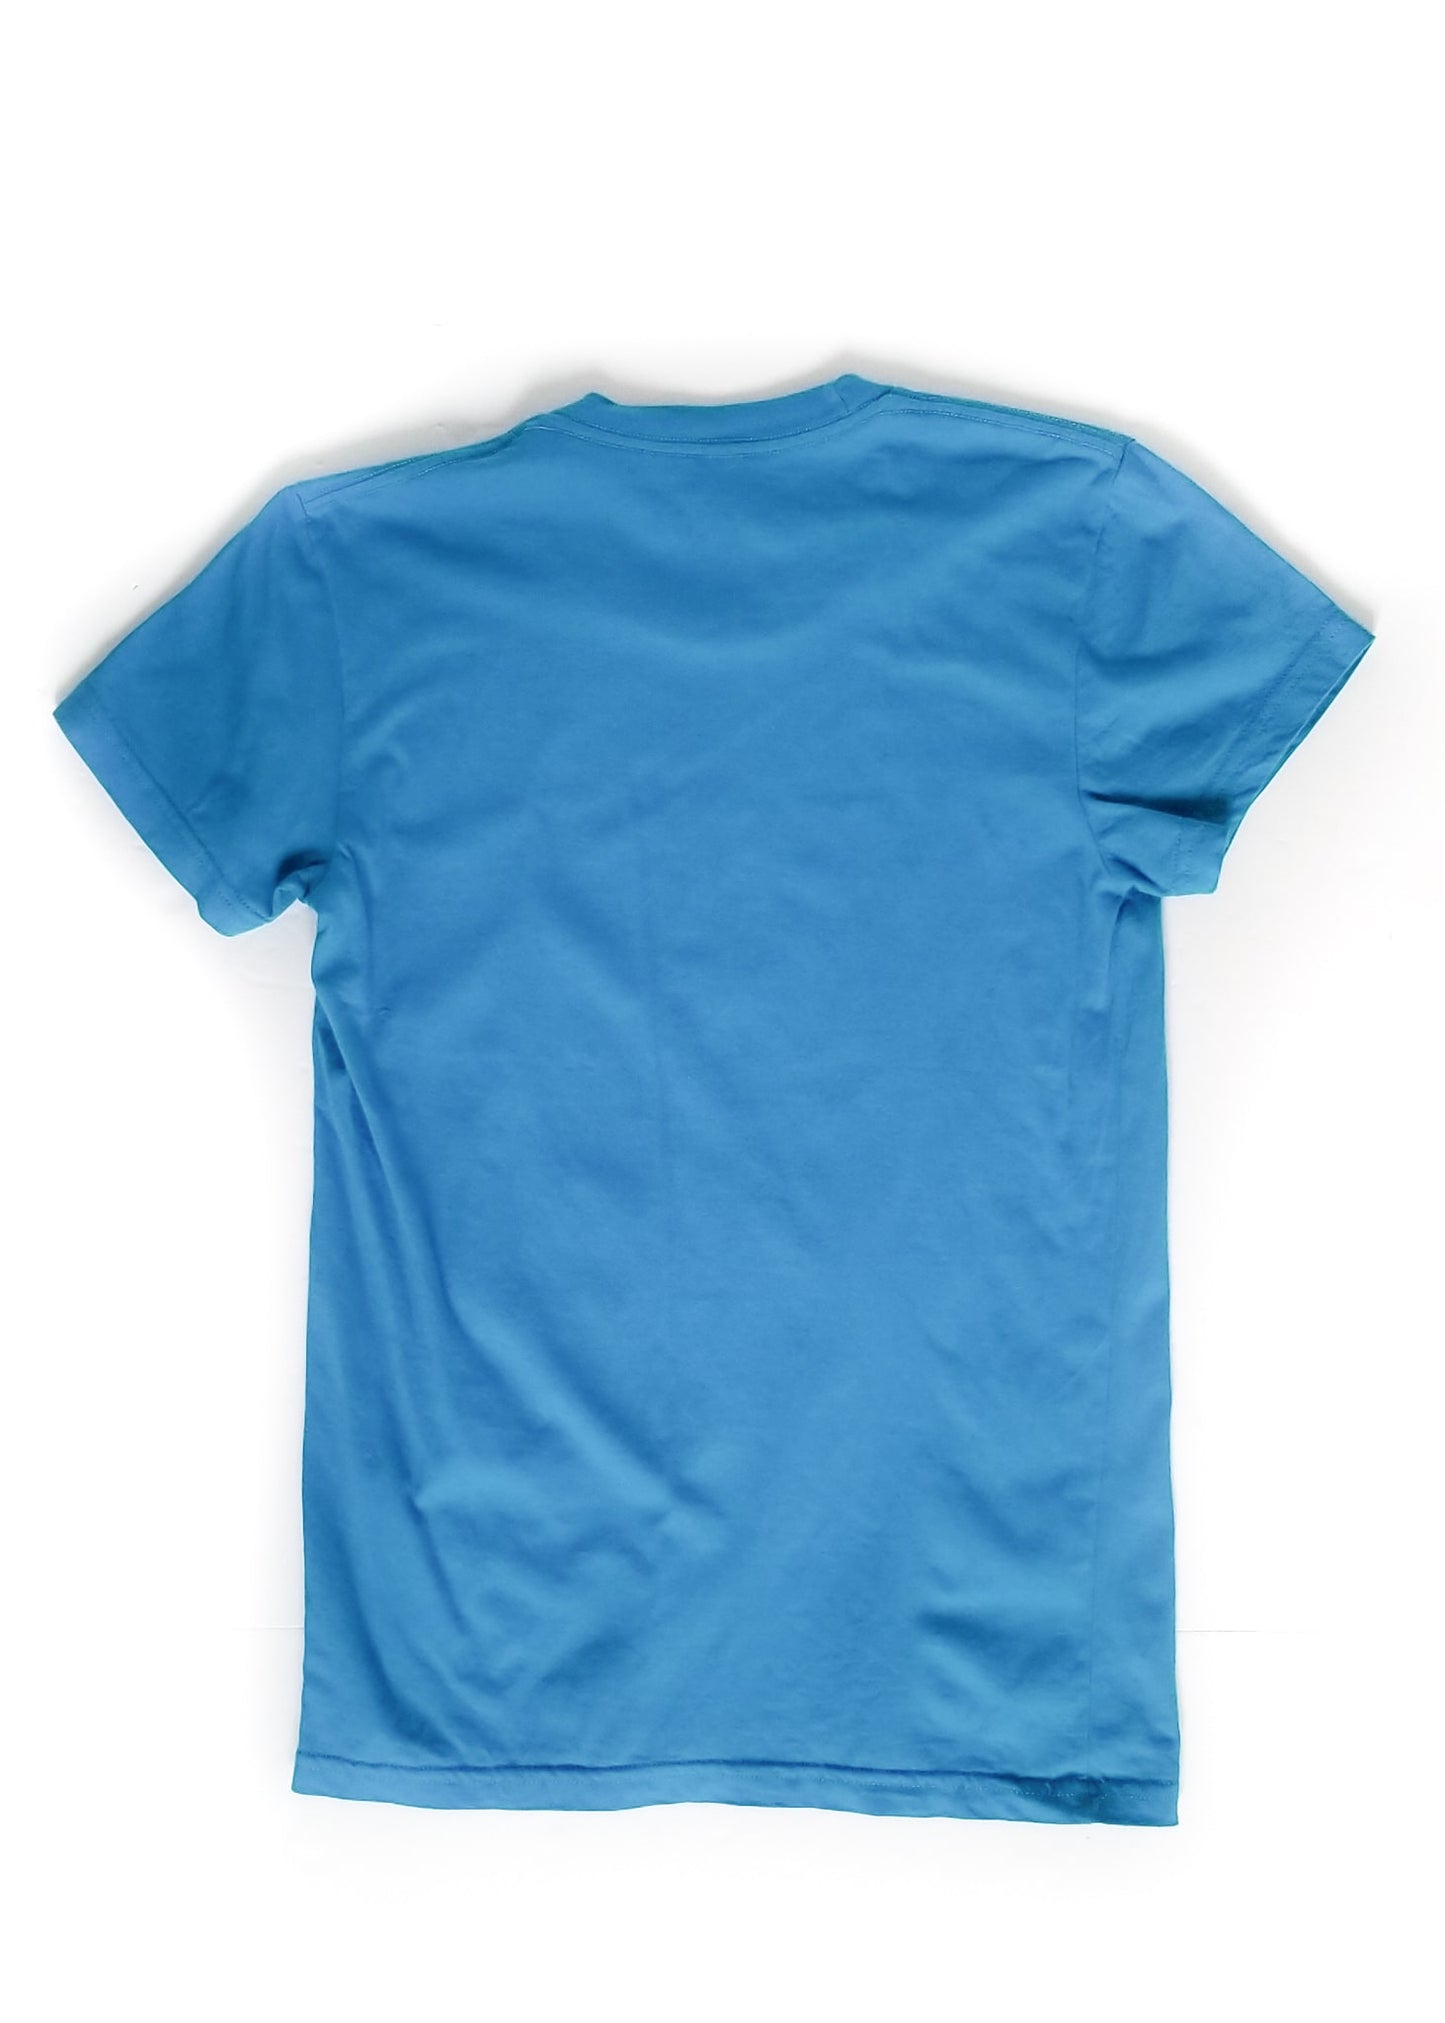 My Barn Child Graphic T Shirt - Blue - Women's Small/Medium